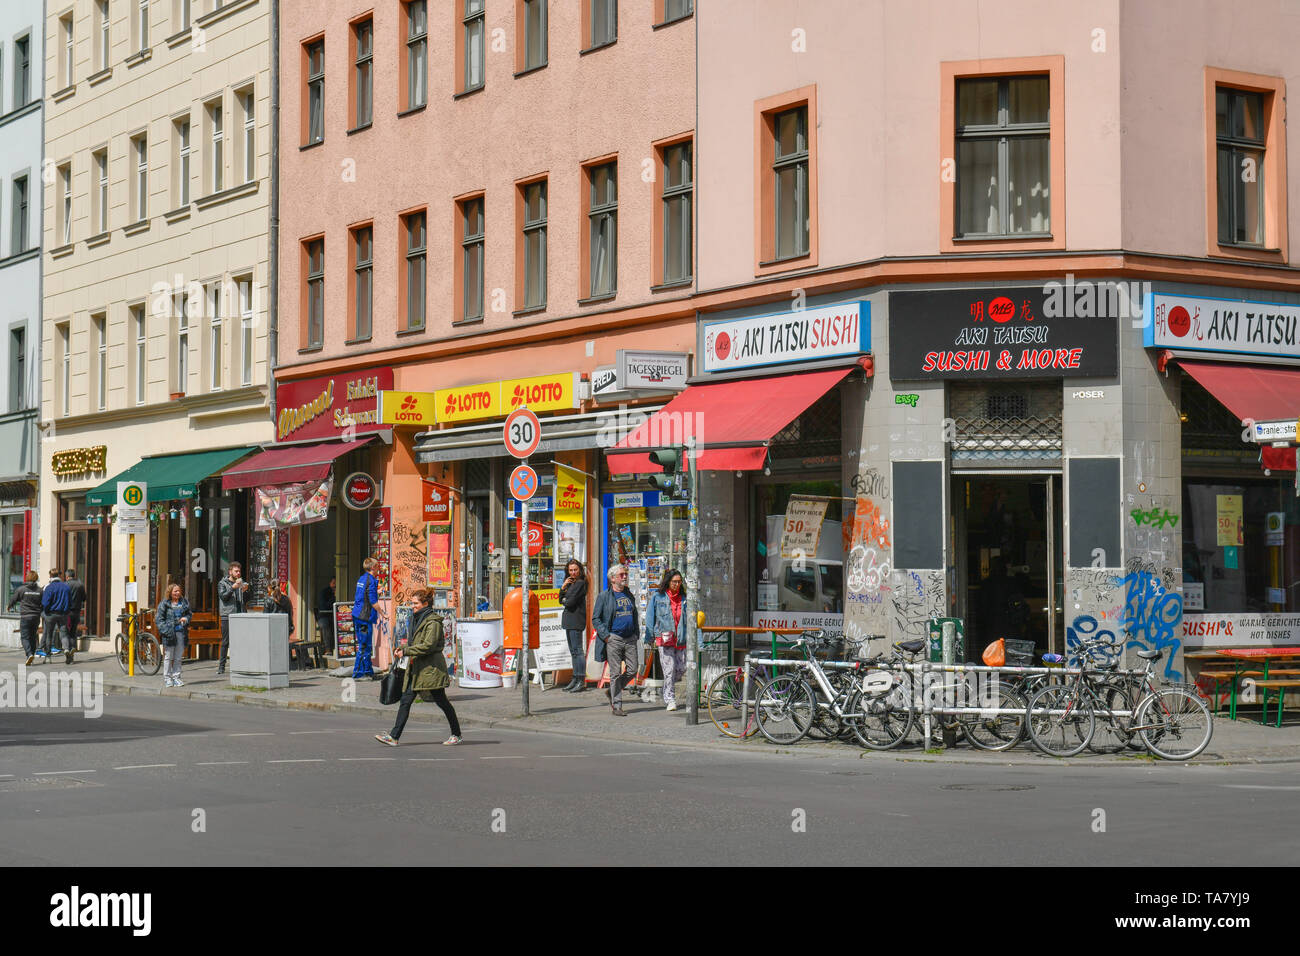 Scena di strada, chiosco, Oranienstrasse, Krizevac, Berlino, Germania, Straßenszene, chiosco, Oranienstraße, Kreuzberg, Deutschland Foto Stock